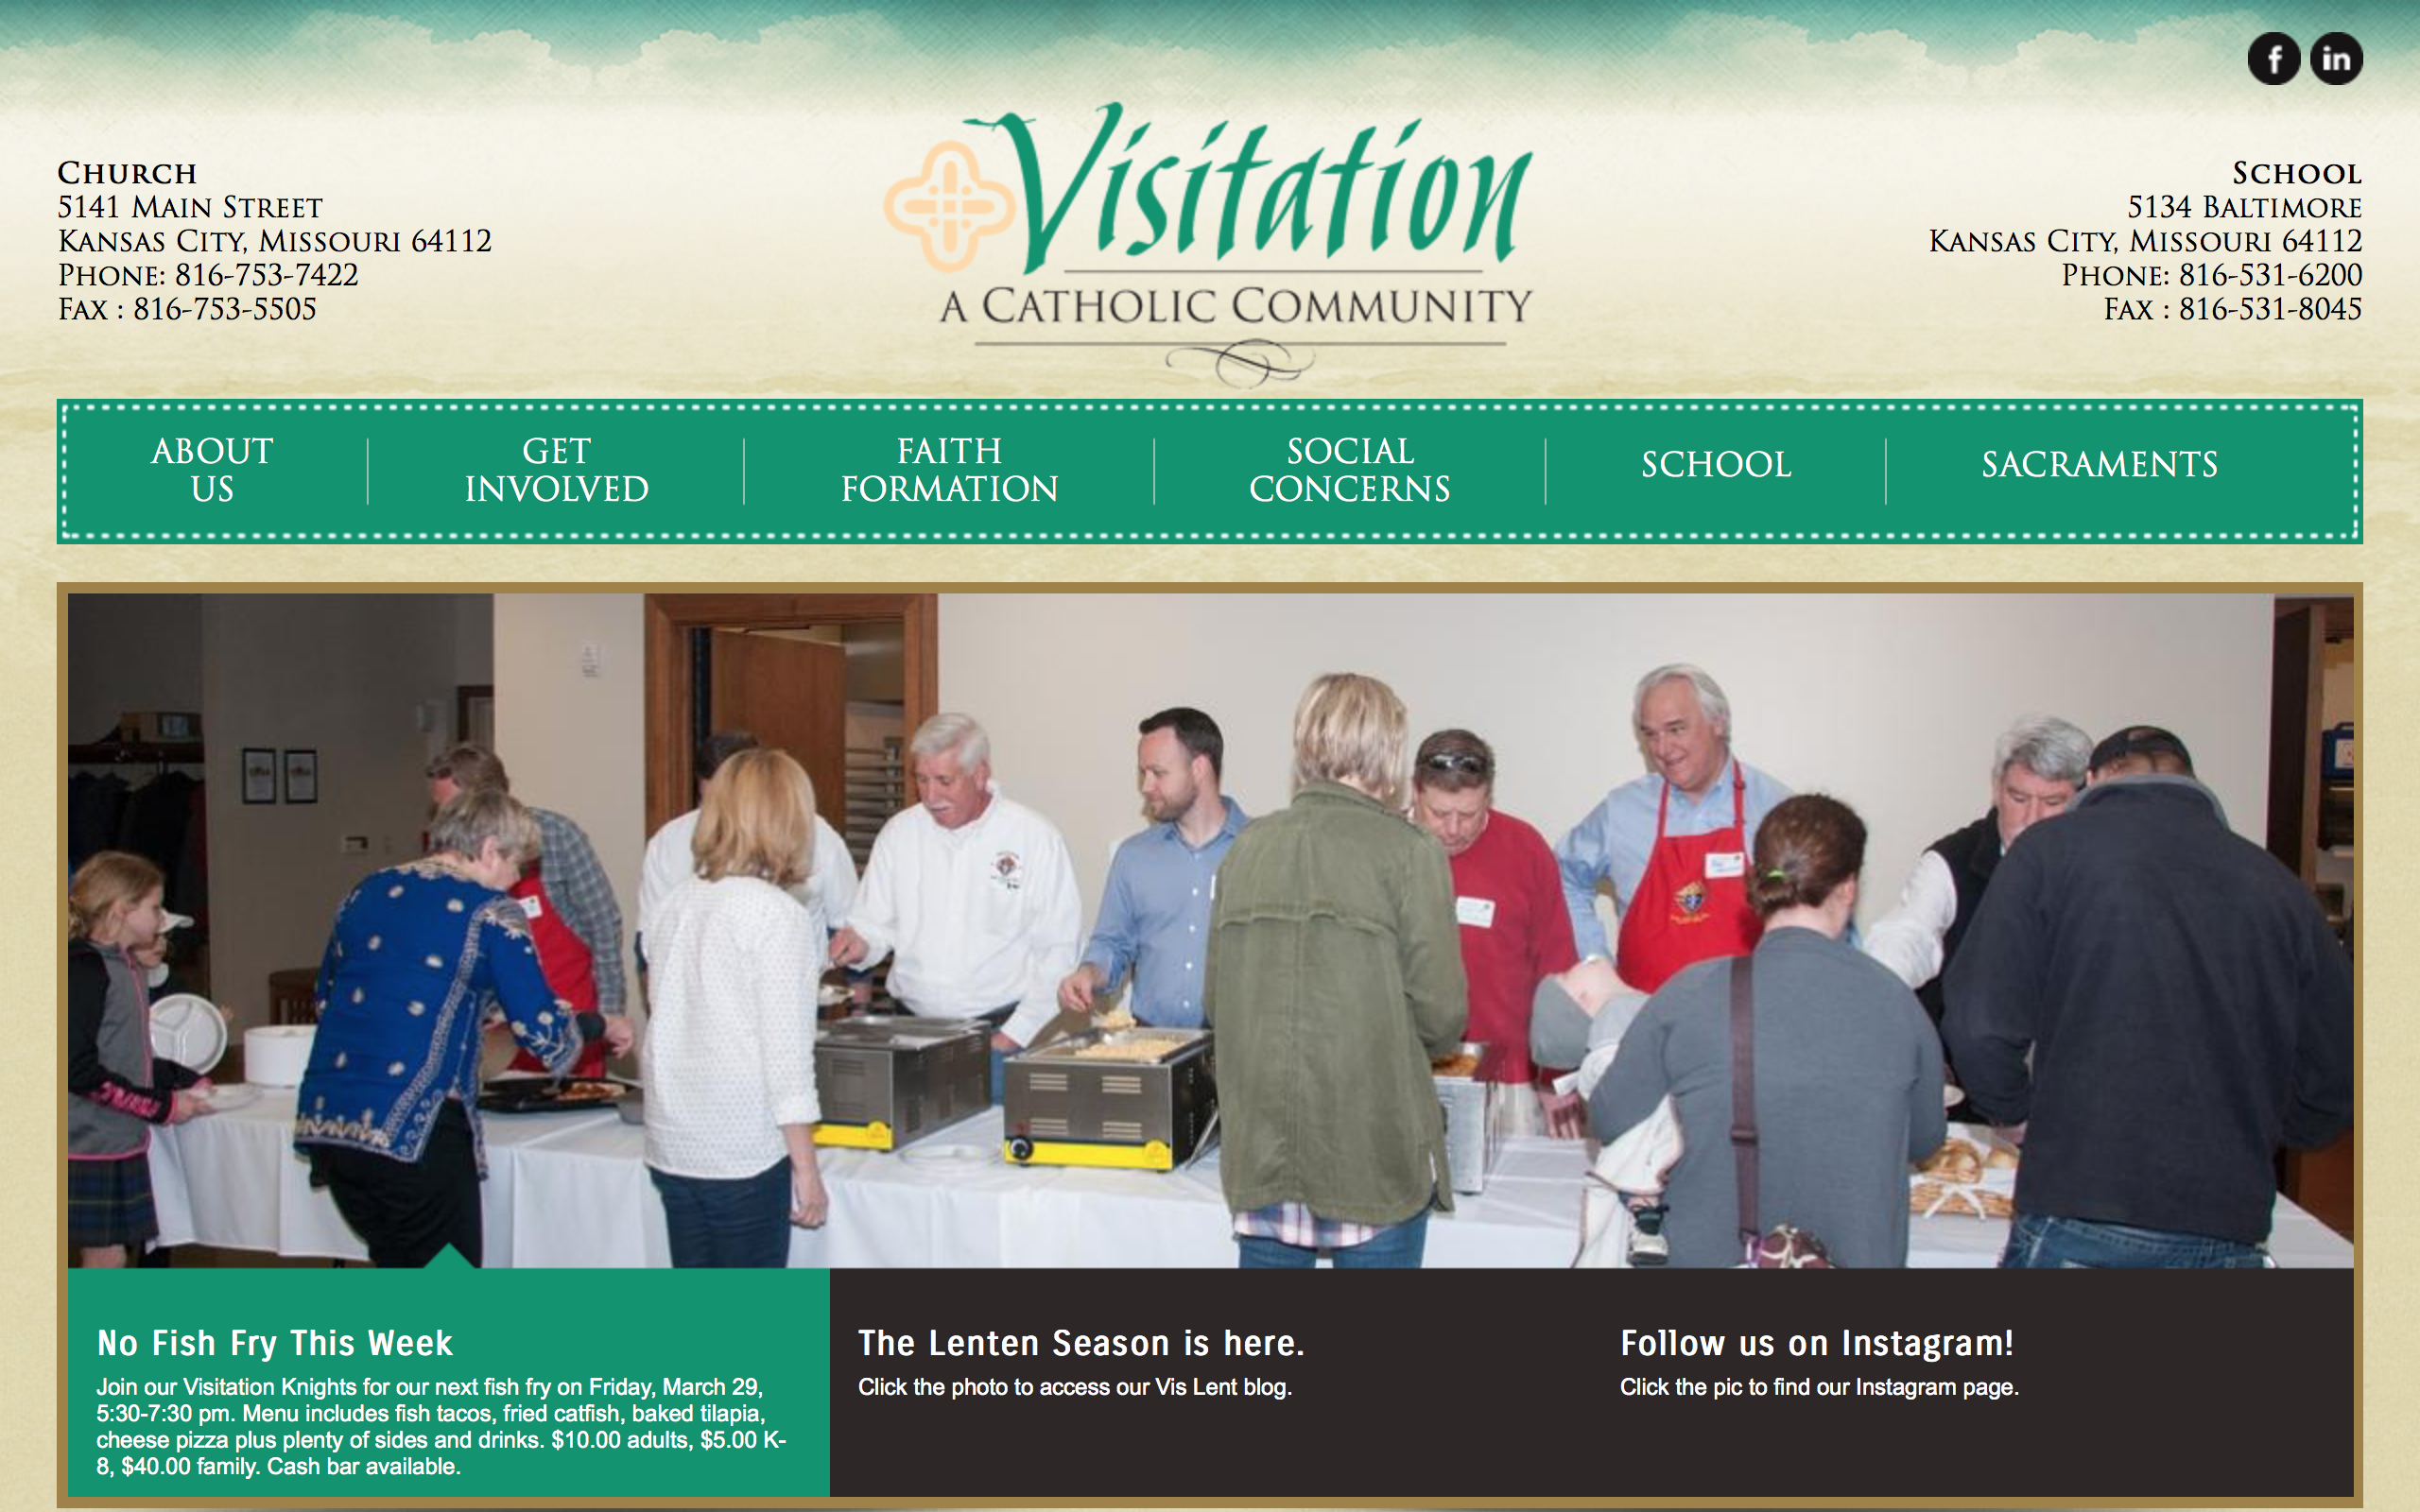 Archived Kansas City website for Visitation